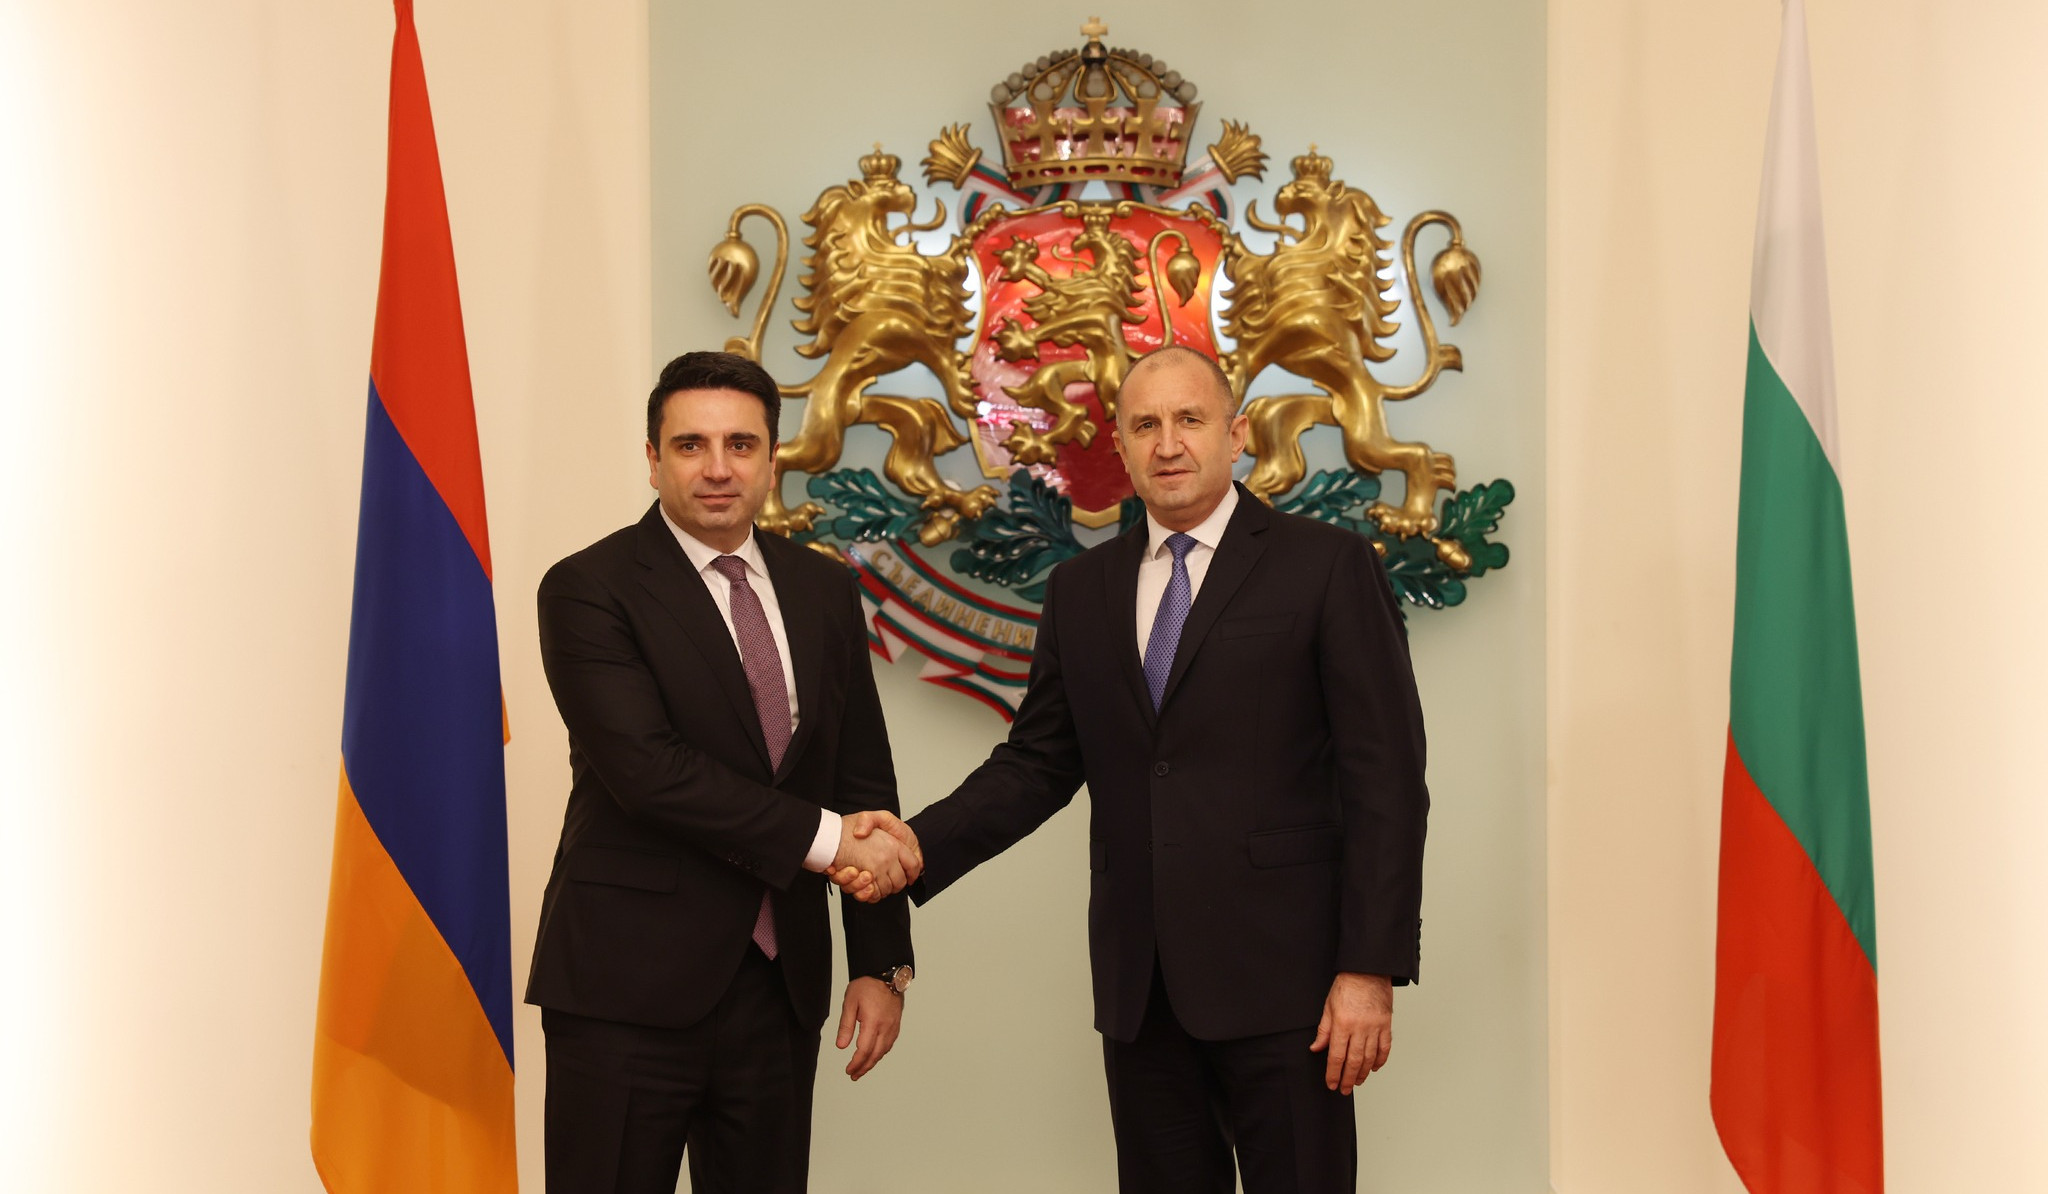 President of Bulgaria Rumen Radev receives delegation led by Alen Simonyan